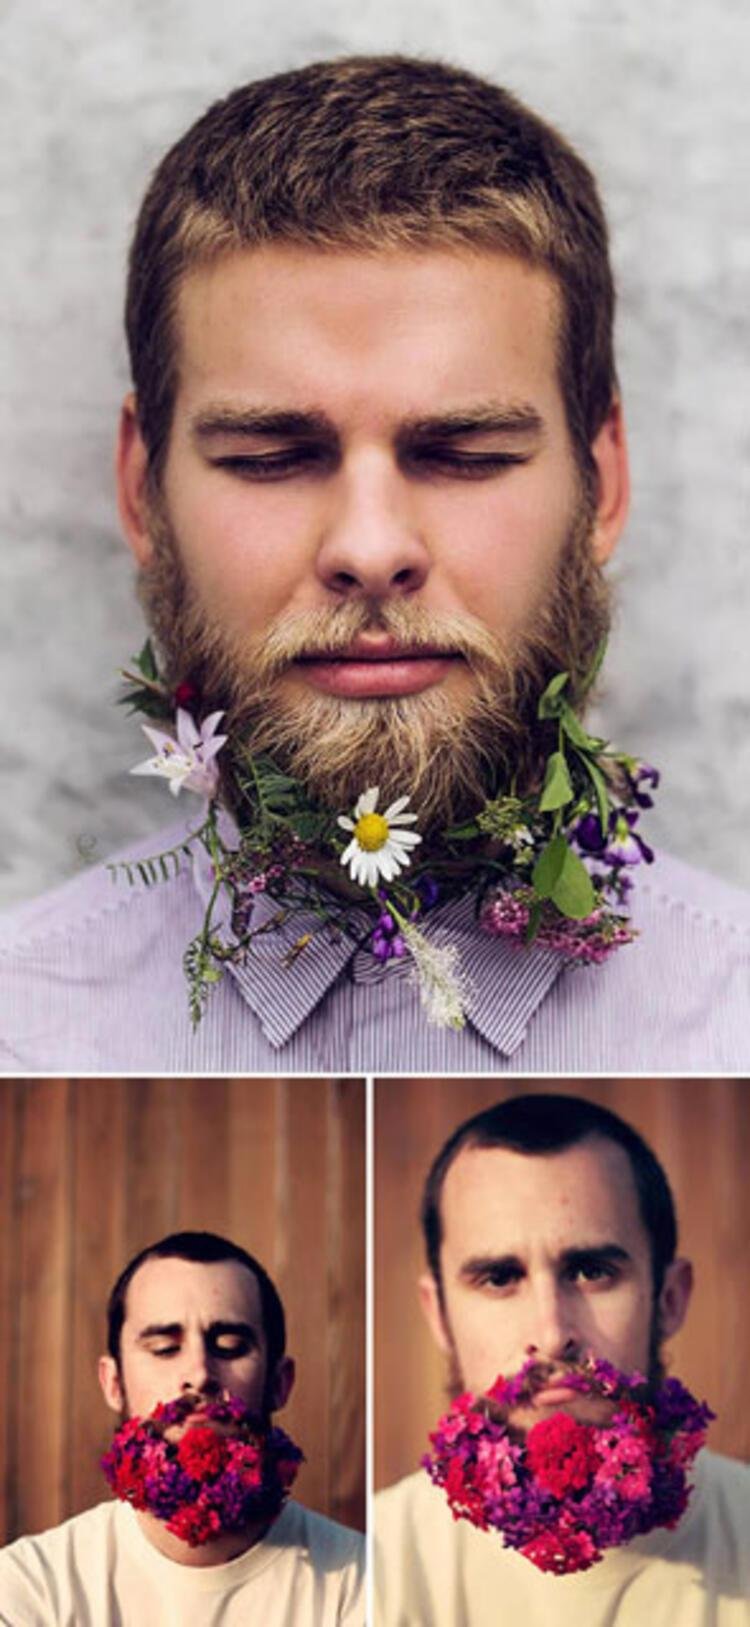 Борода из цветов у девушки